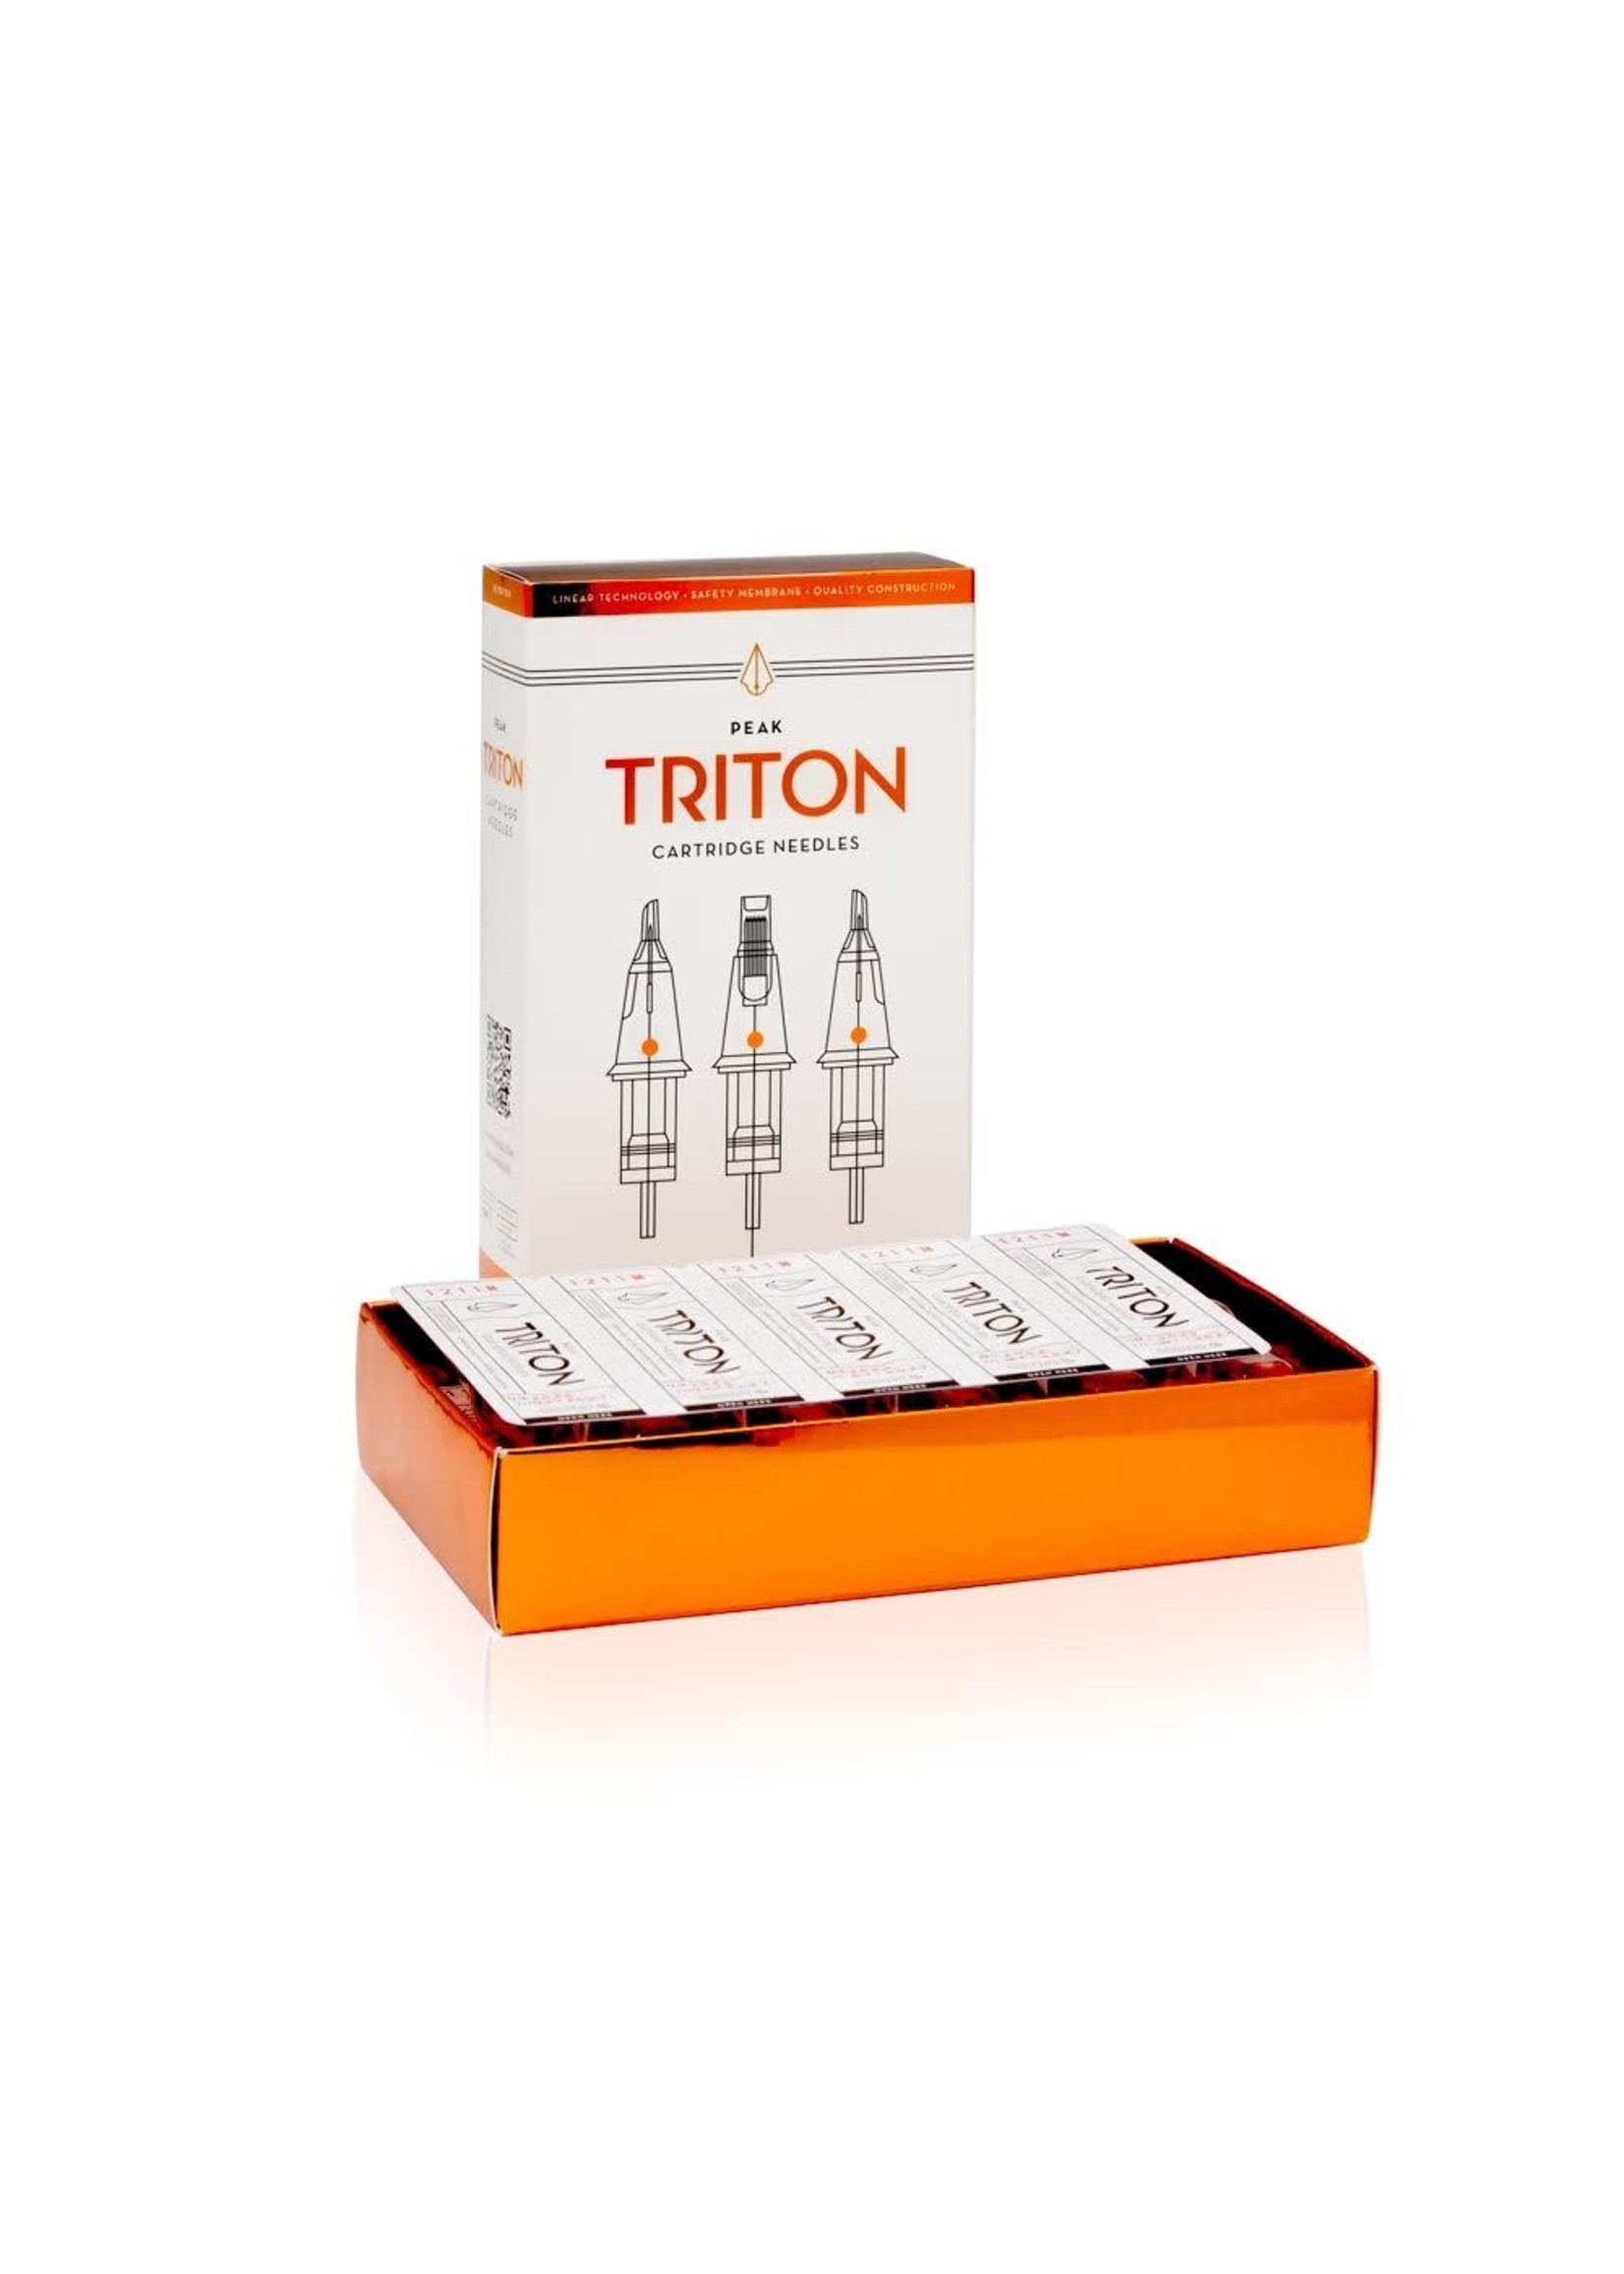 Peak Triton Cartridge Needles — 7 Super Tight Round Liners (20)